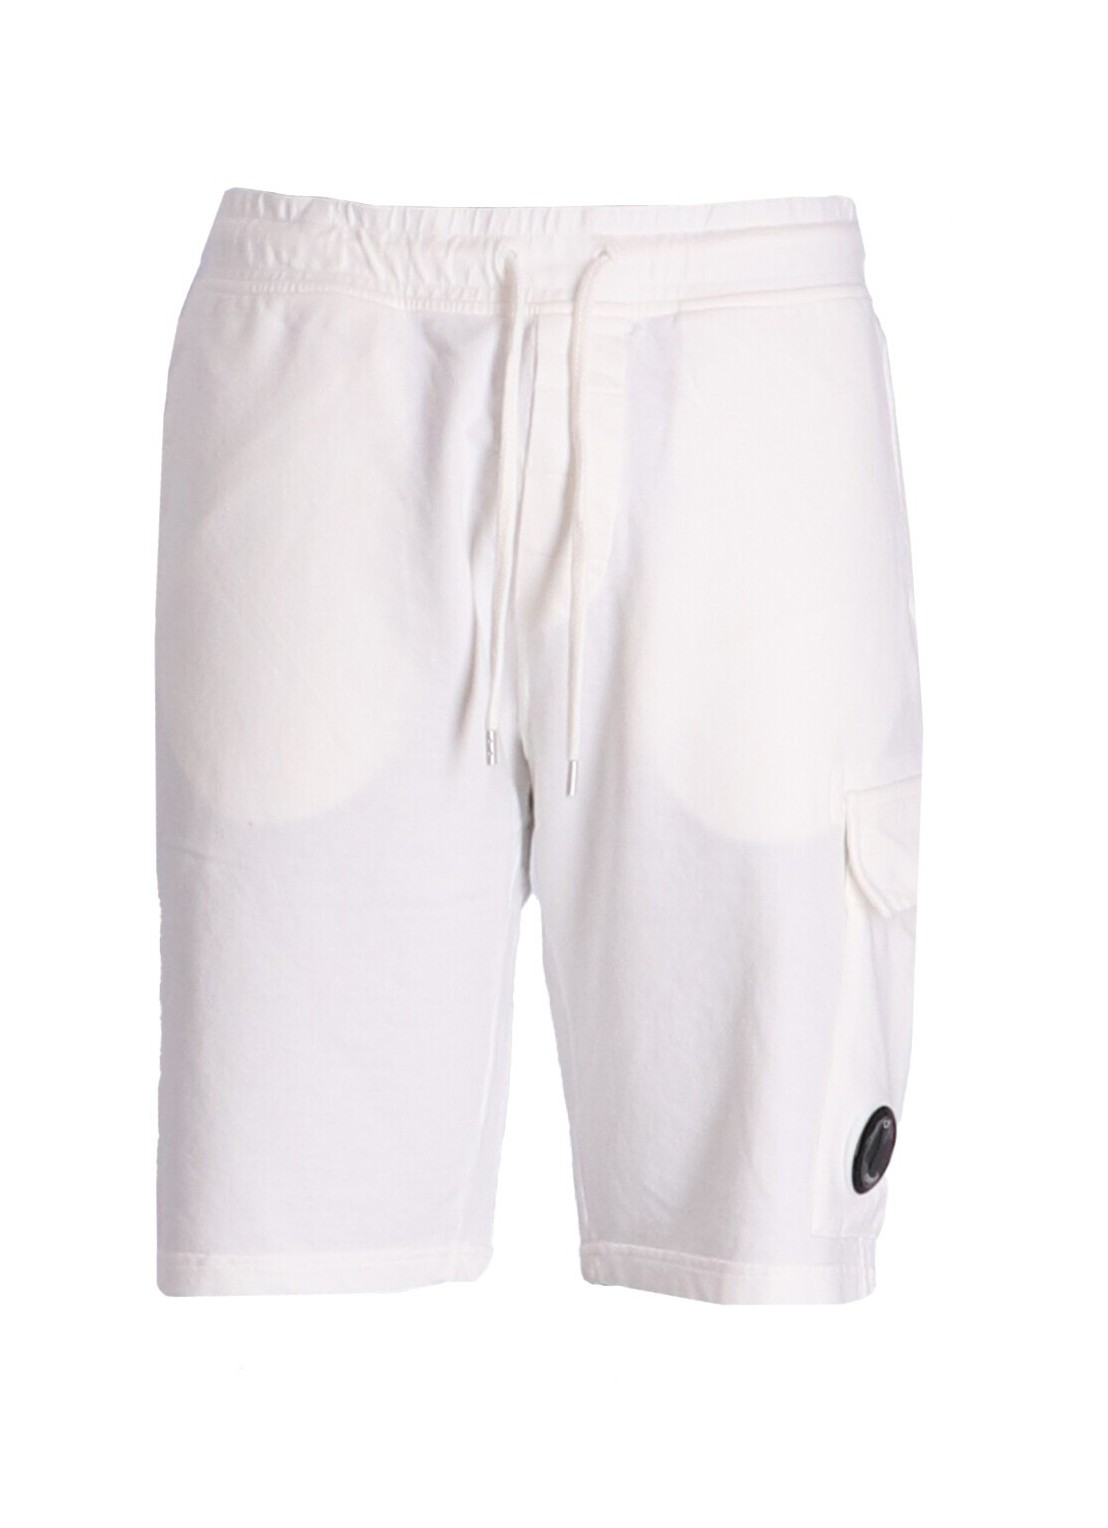 Pantalon corto c.p.company short pant man light fleece cargo shorts 15cmsb021a002246g 103 talla L
 